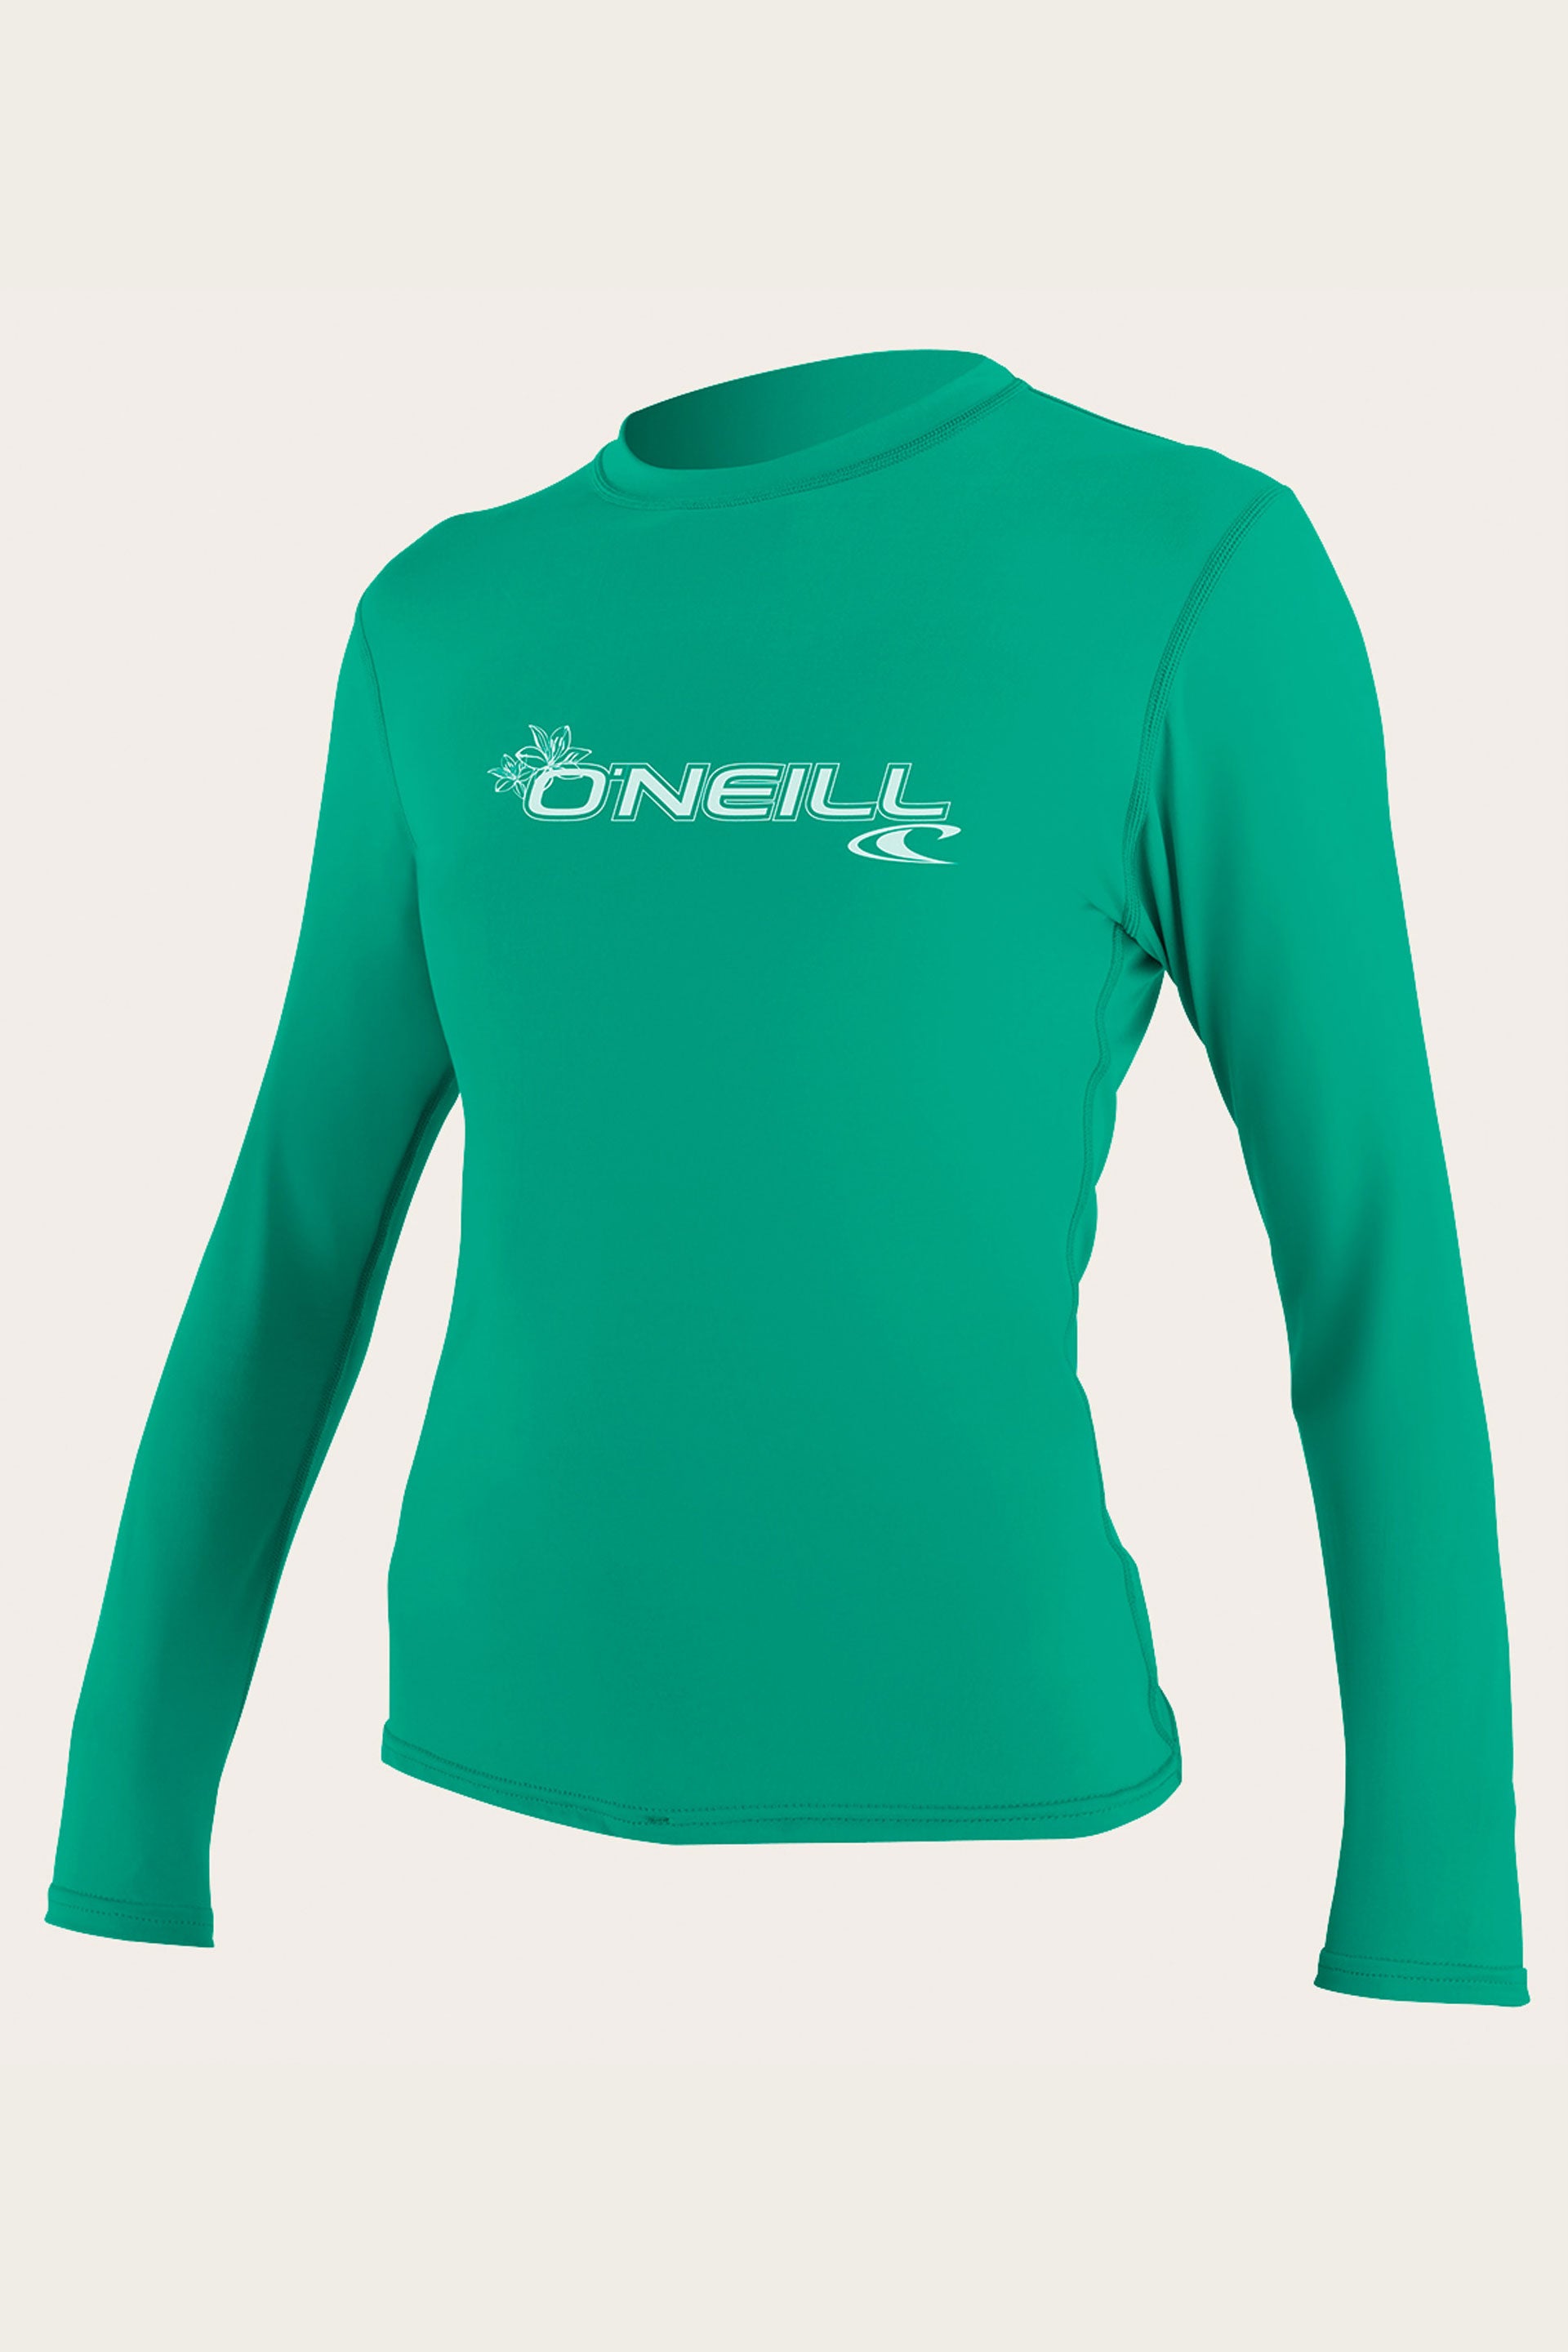 O'Neill Women's Basic Skins UPF 50+ Long Sleeve Sun Shirt, Large / Seaglass